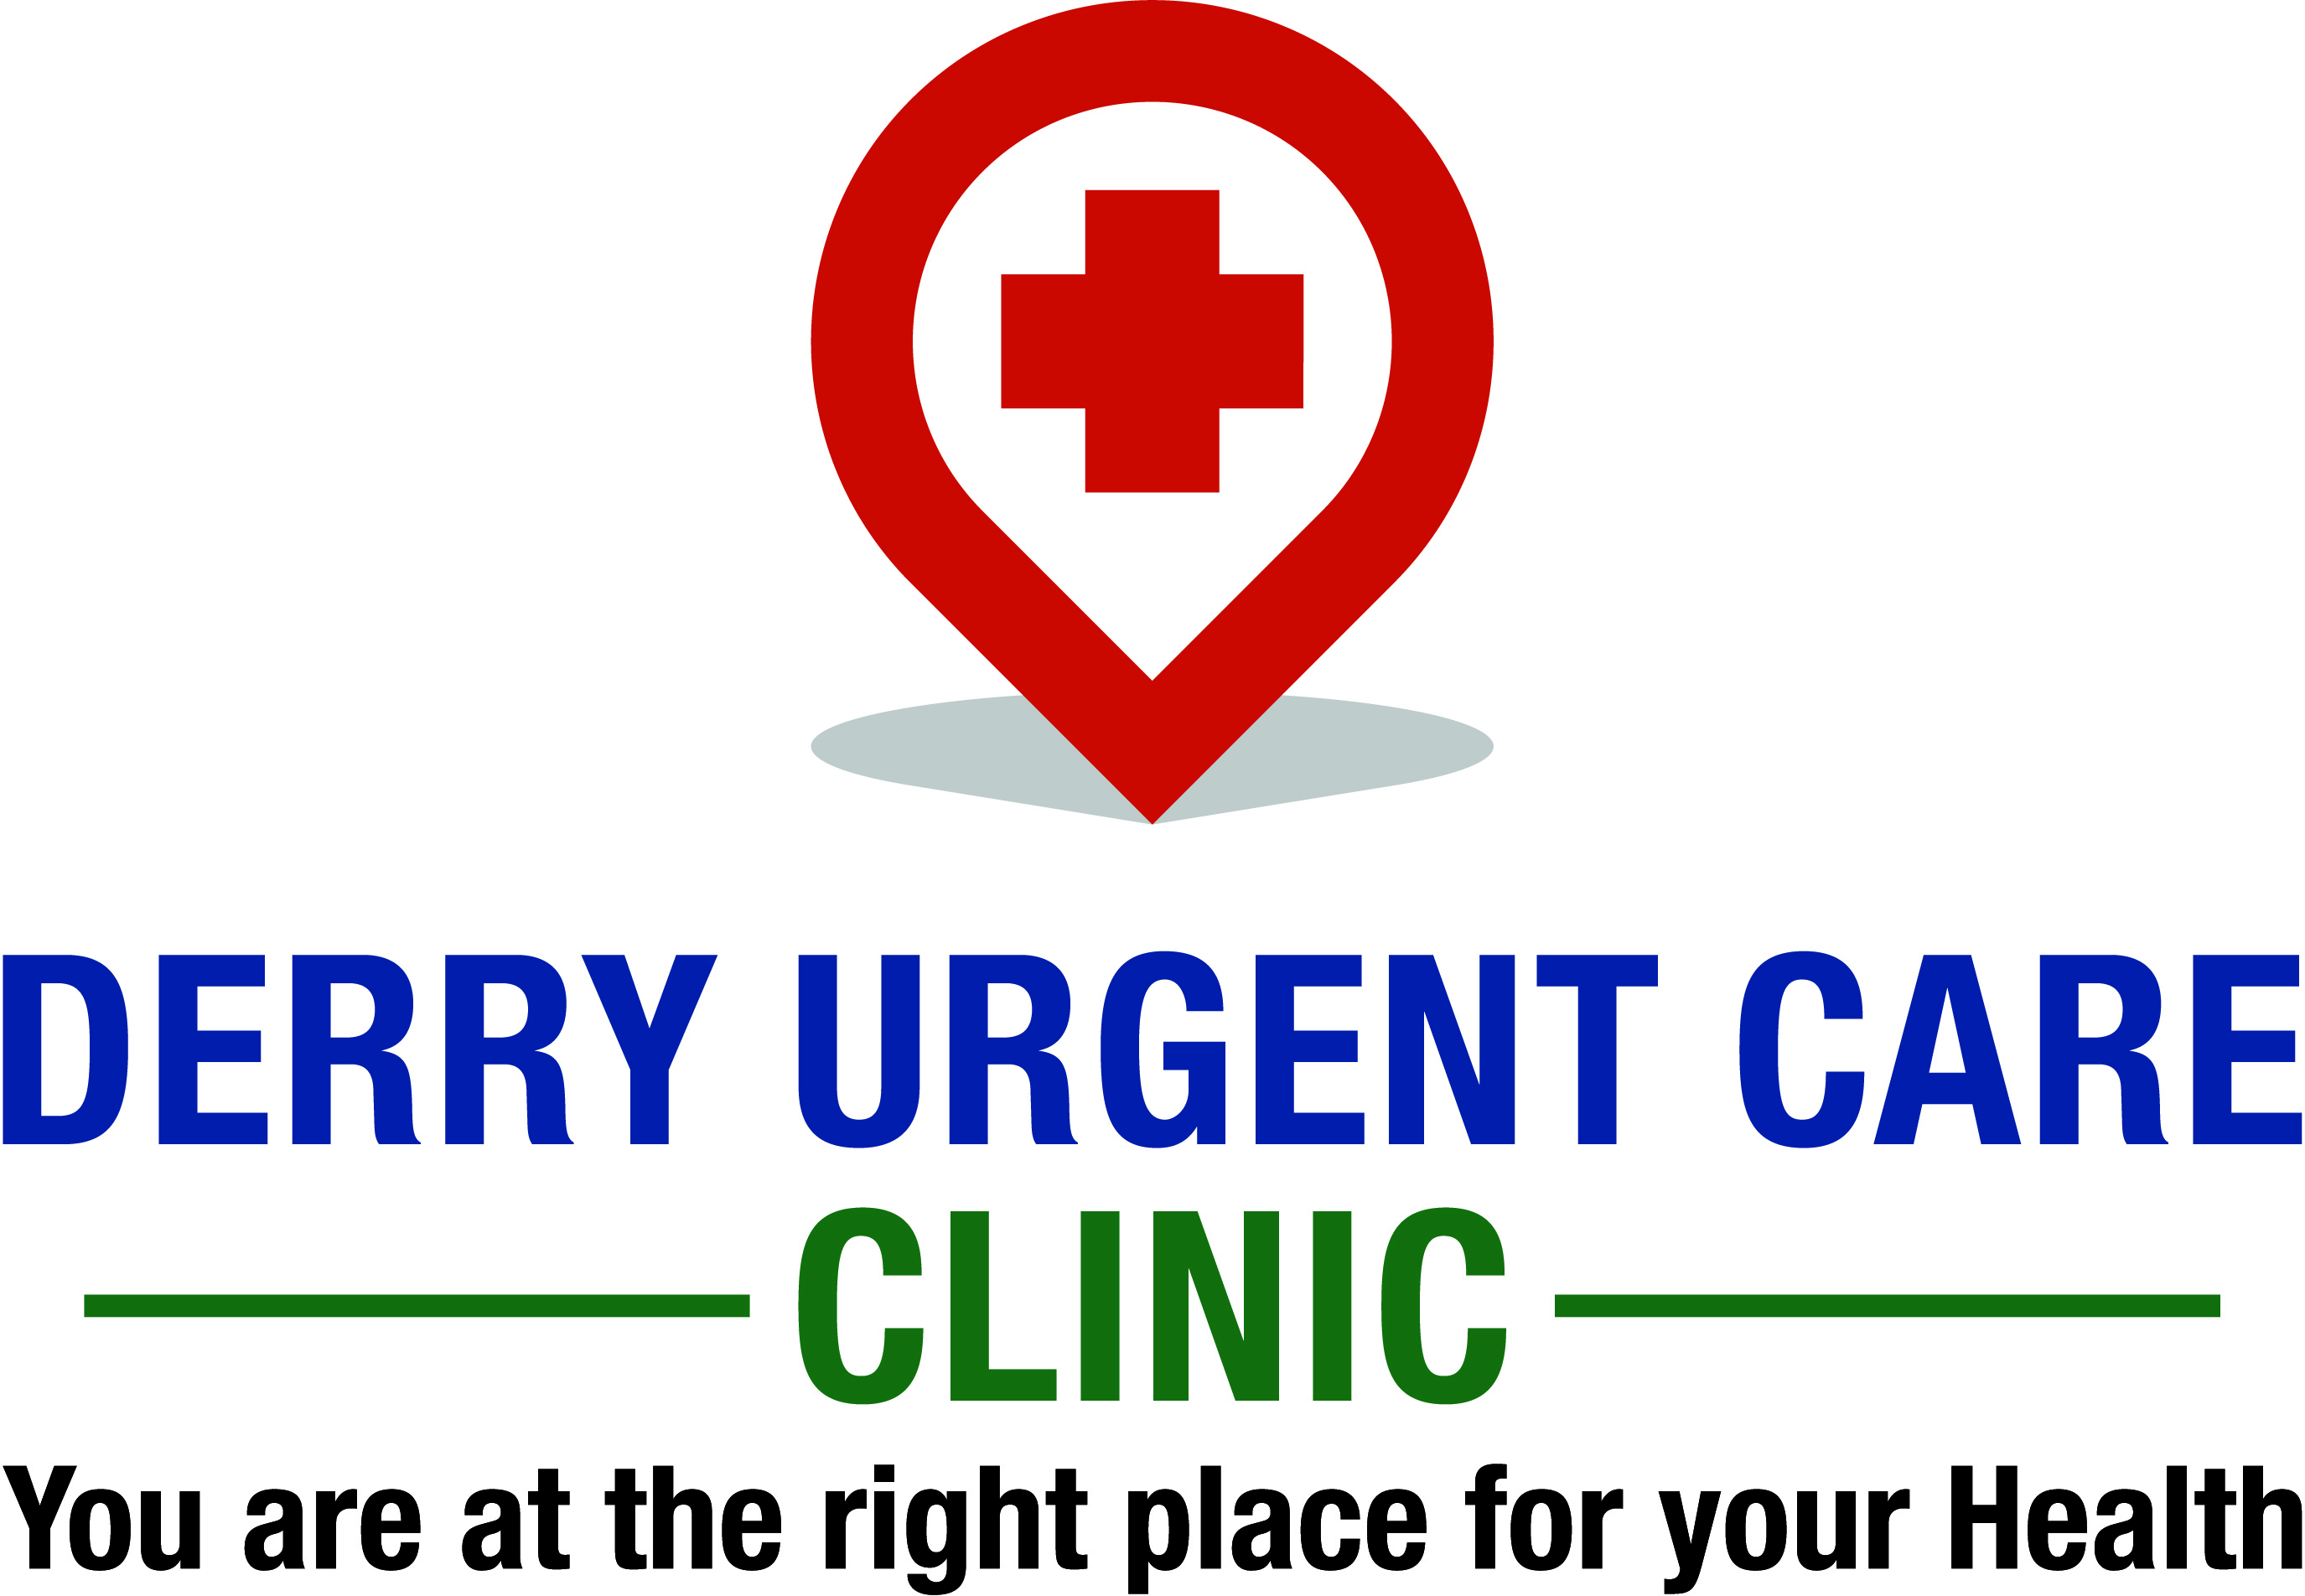 Derry Urgent Care Clinic